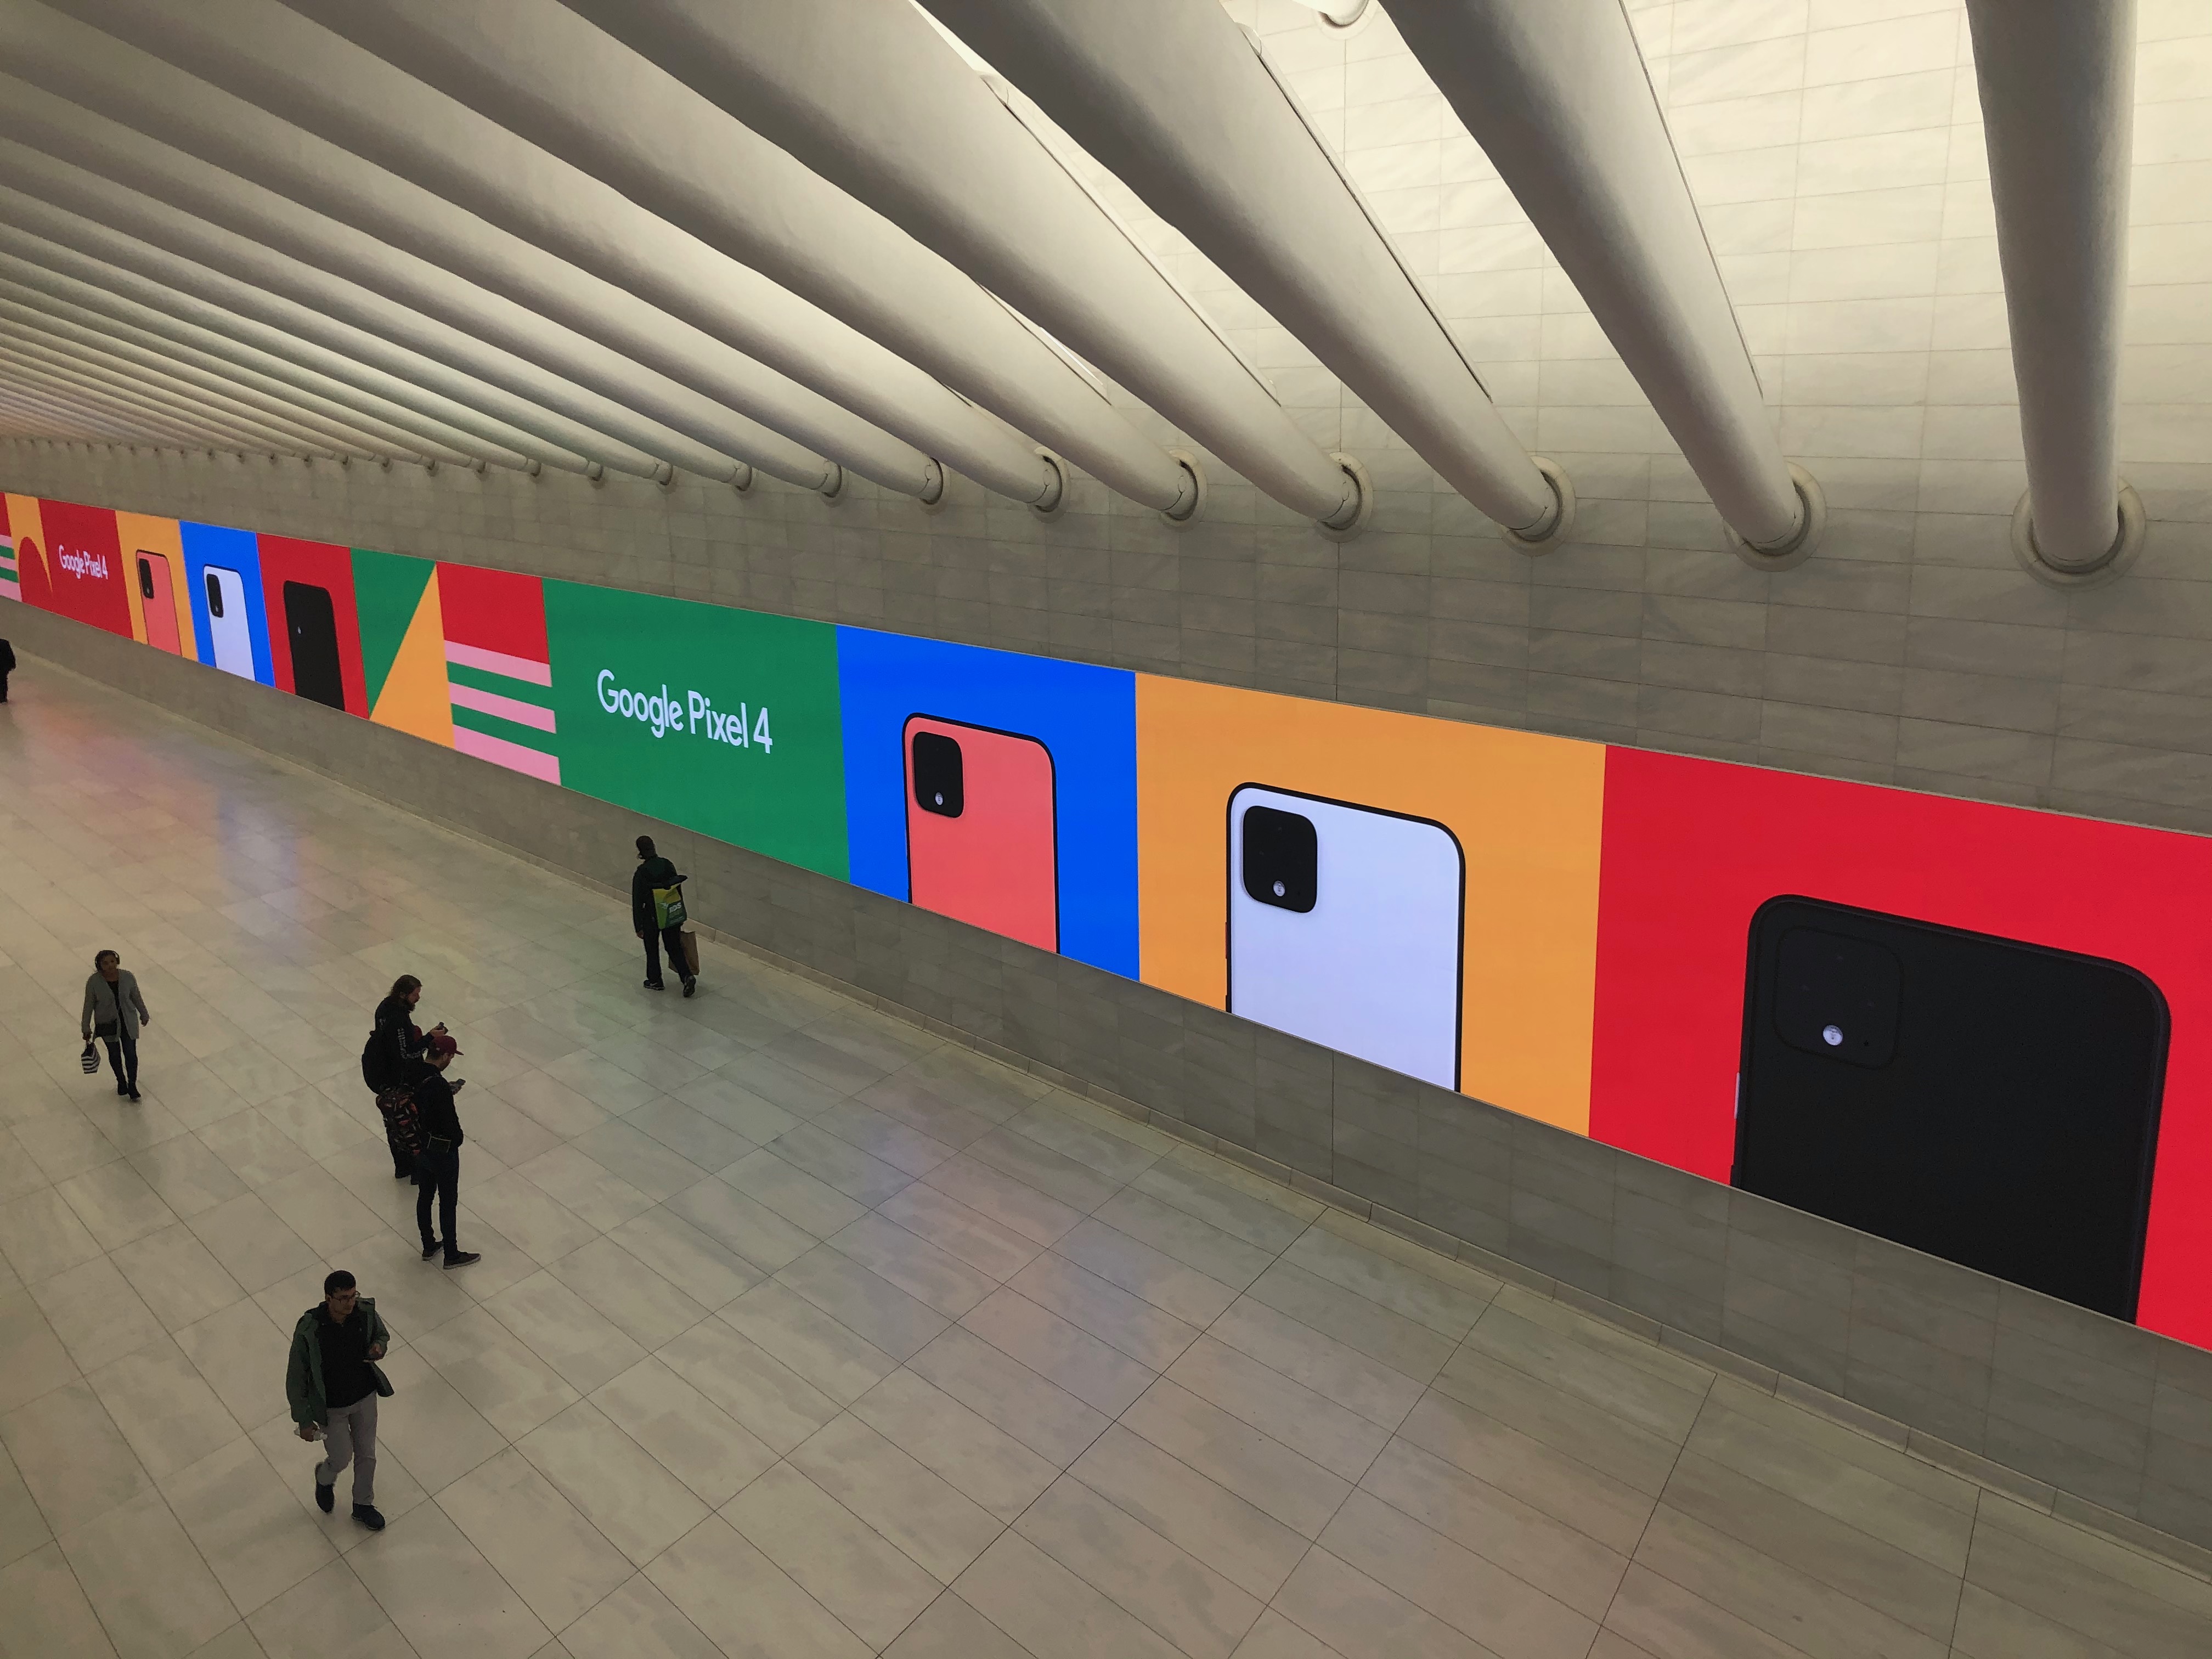 Google Pixel 4 Outdoor Campaign Promos